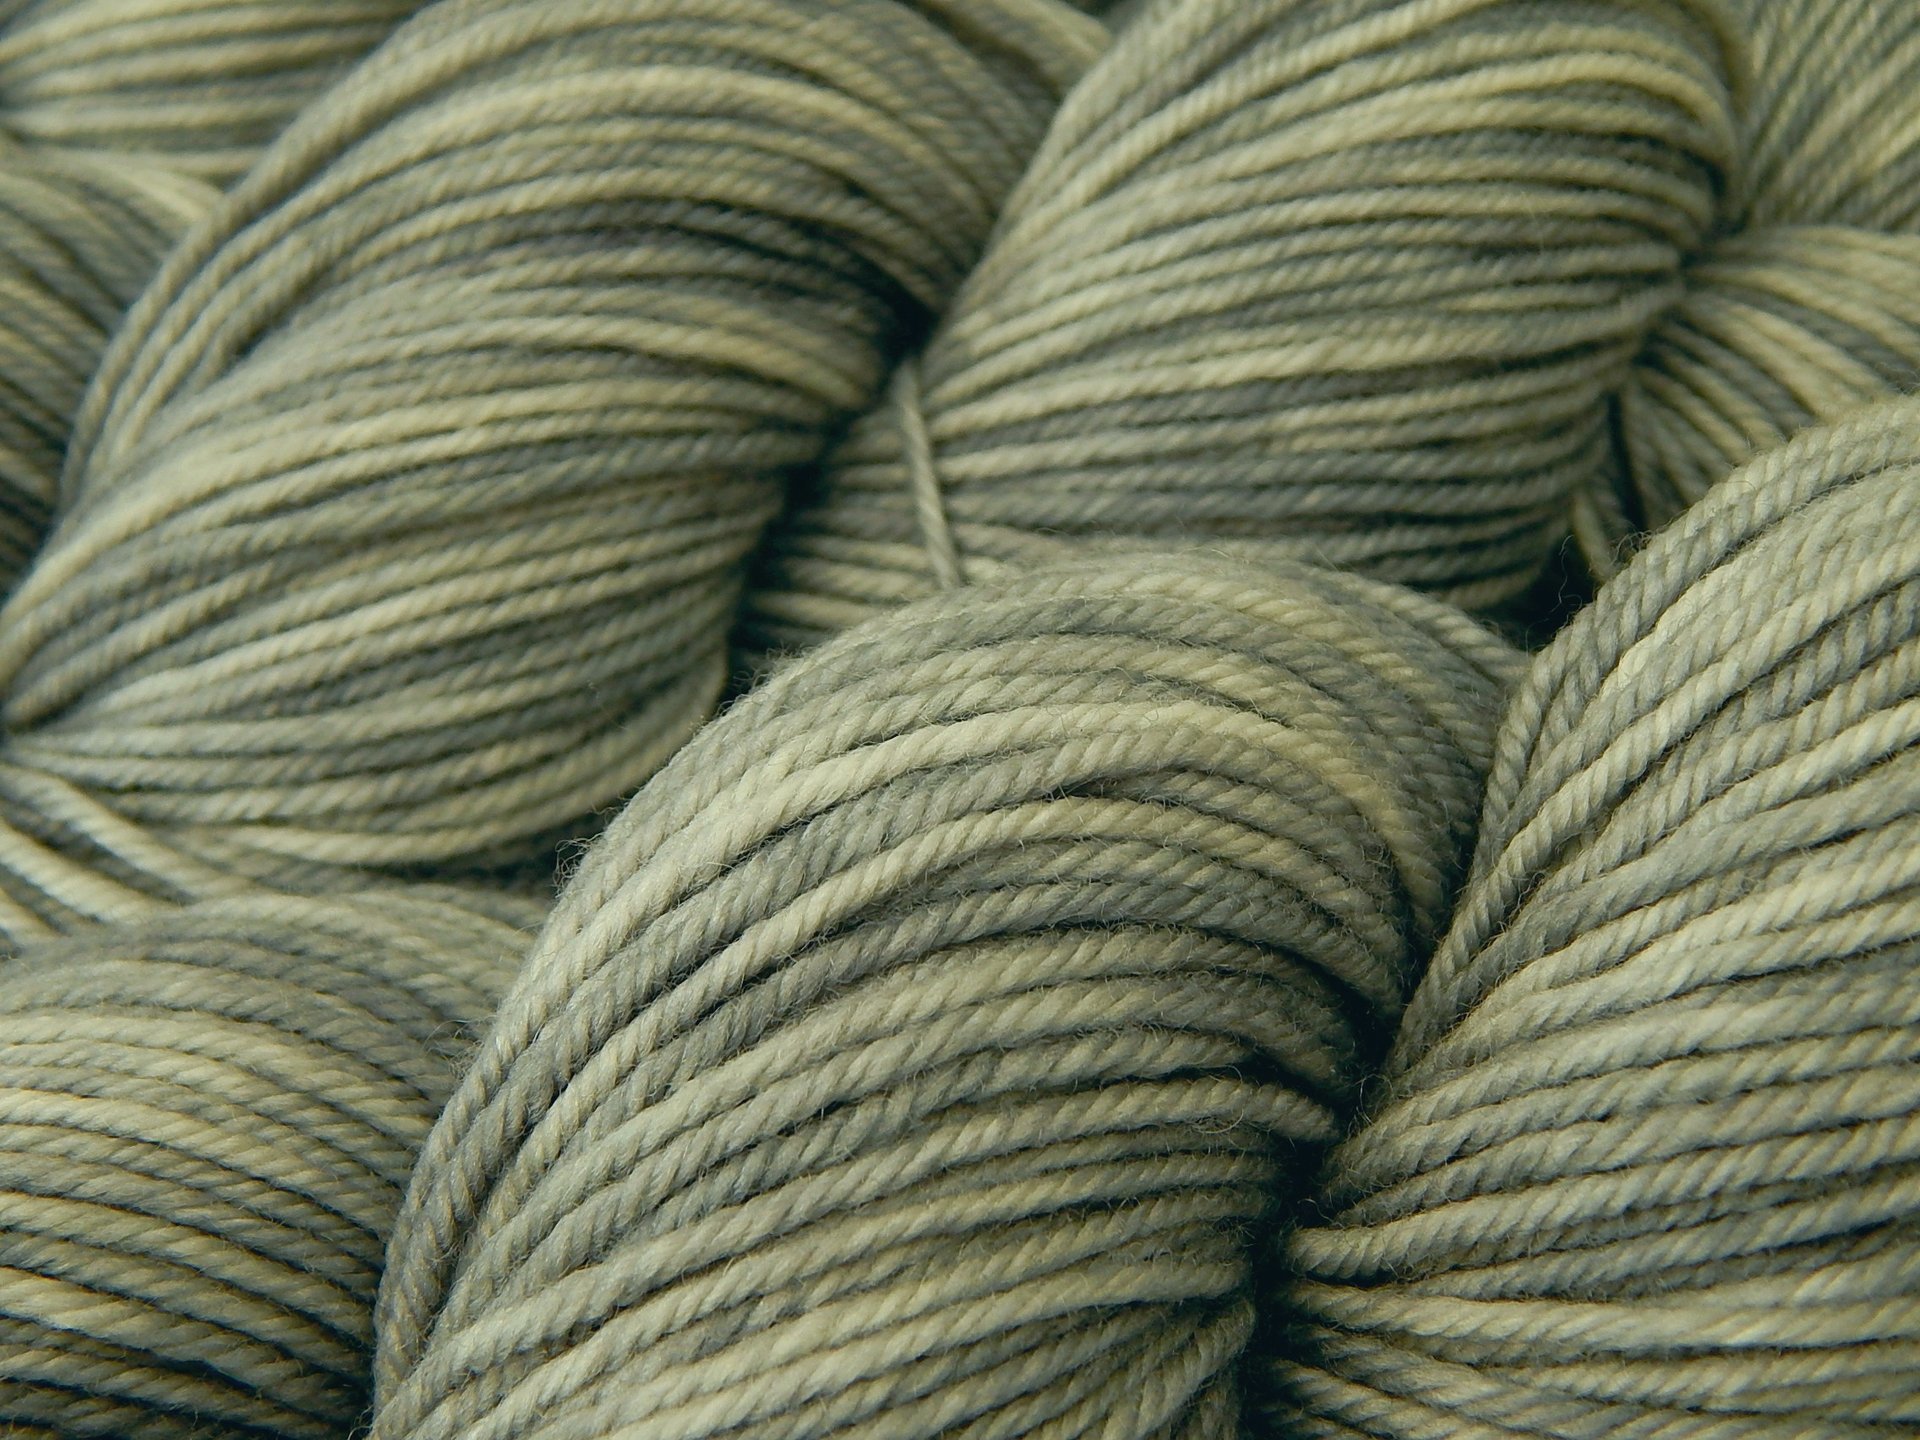 Hand Dyed Yarn, DK Weight 100% Superwash Merino Wool - Silver Lining - Indie Dyed Knitting Yarn, Light Grey Gray Tonal Yarn, Crochet Yarn